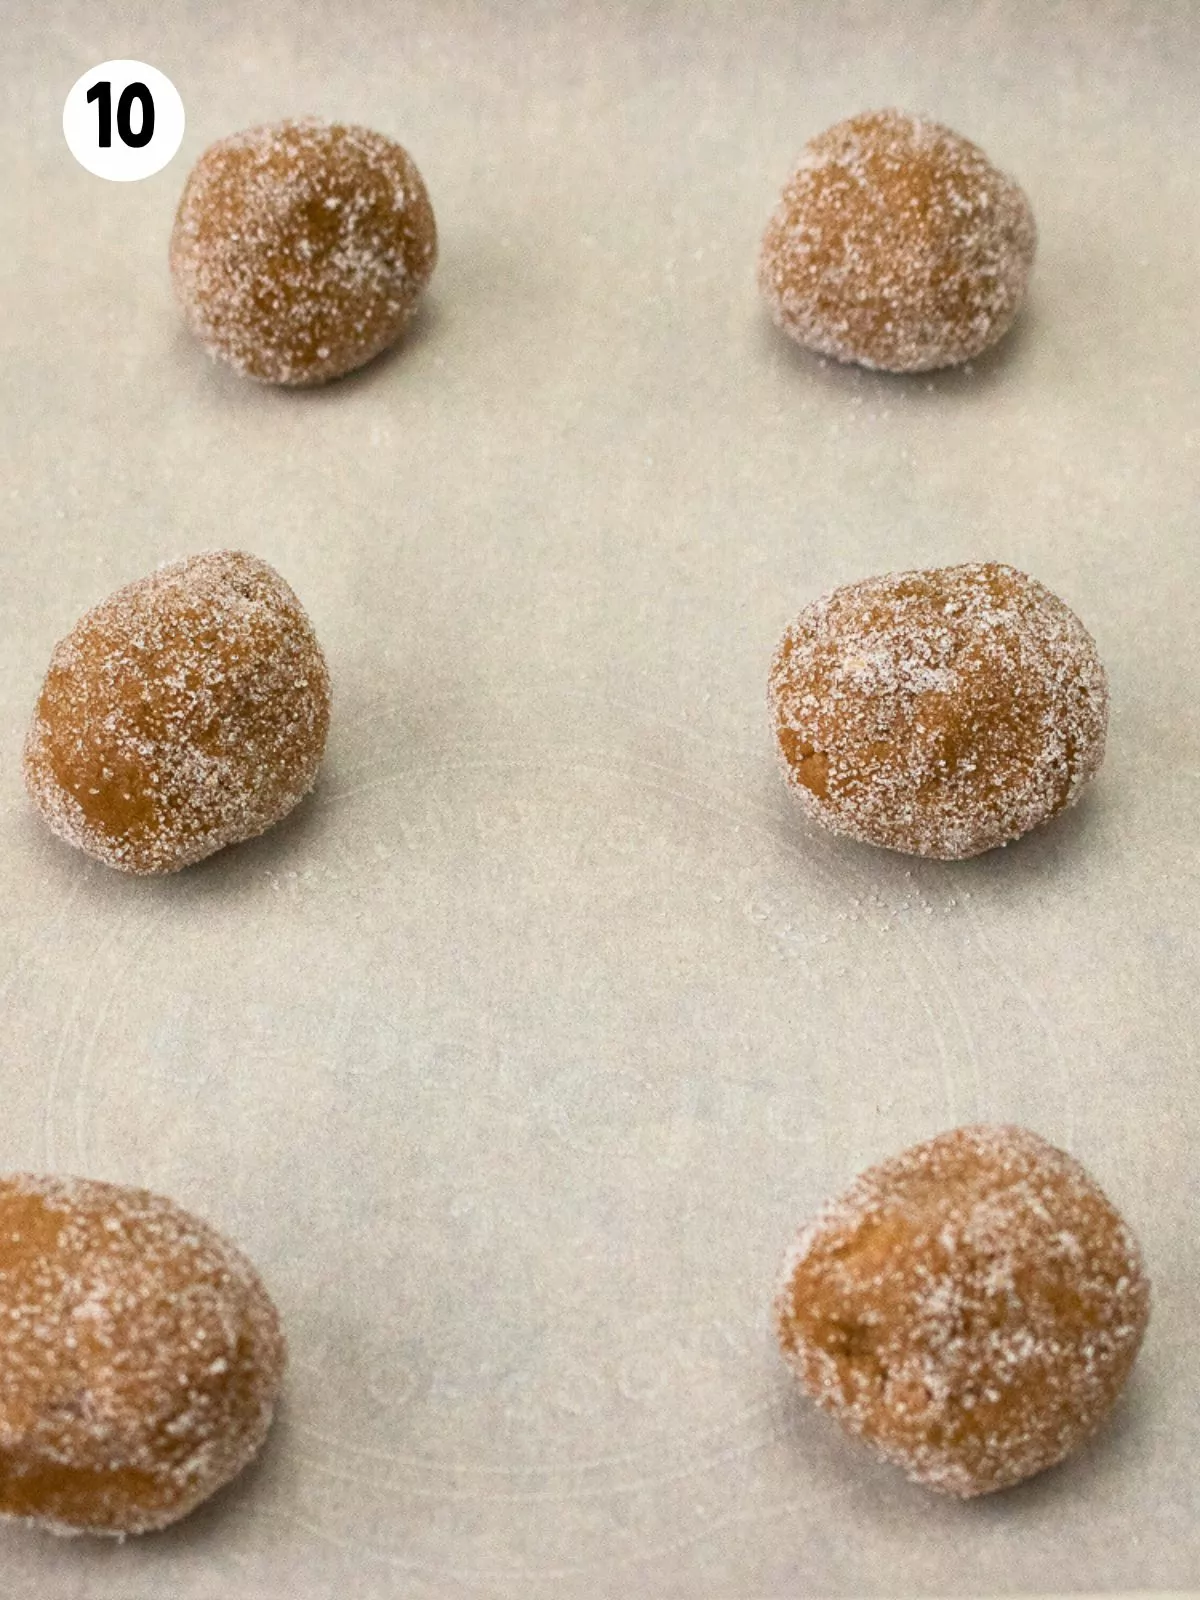 gingersnap cookie dough balls on baking tray.